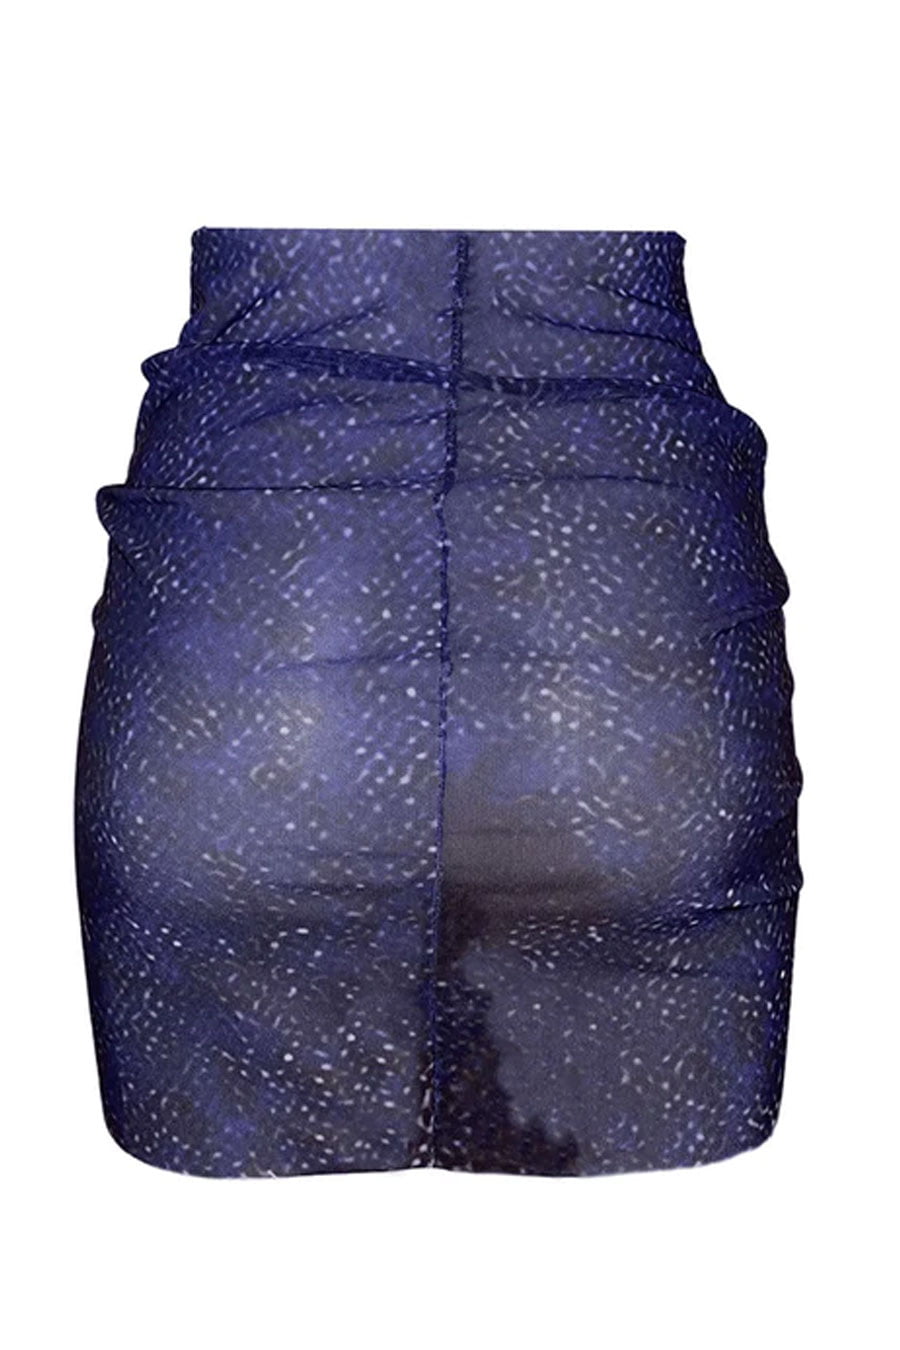 iridiscent-skirt-sharay